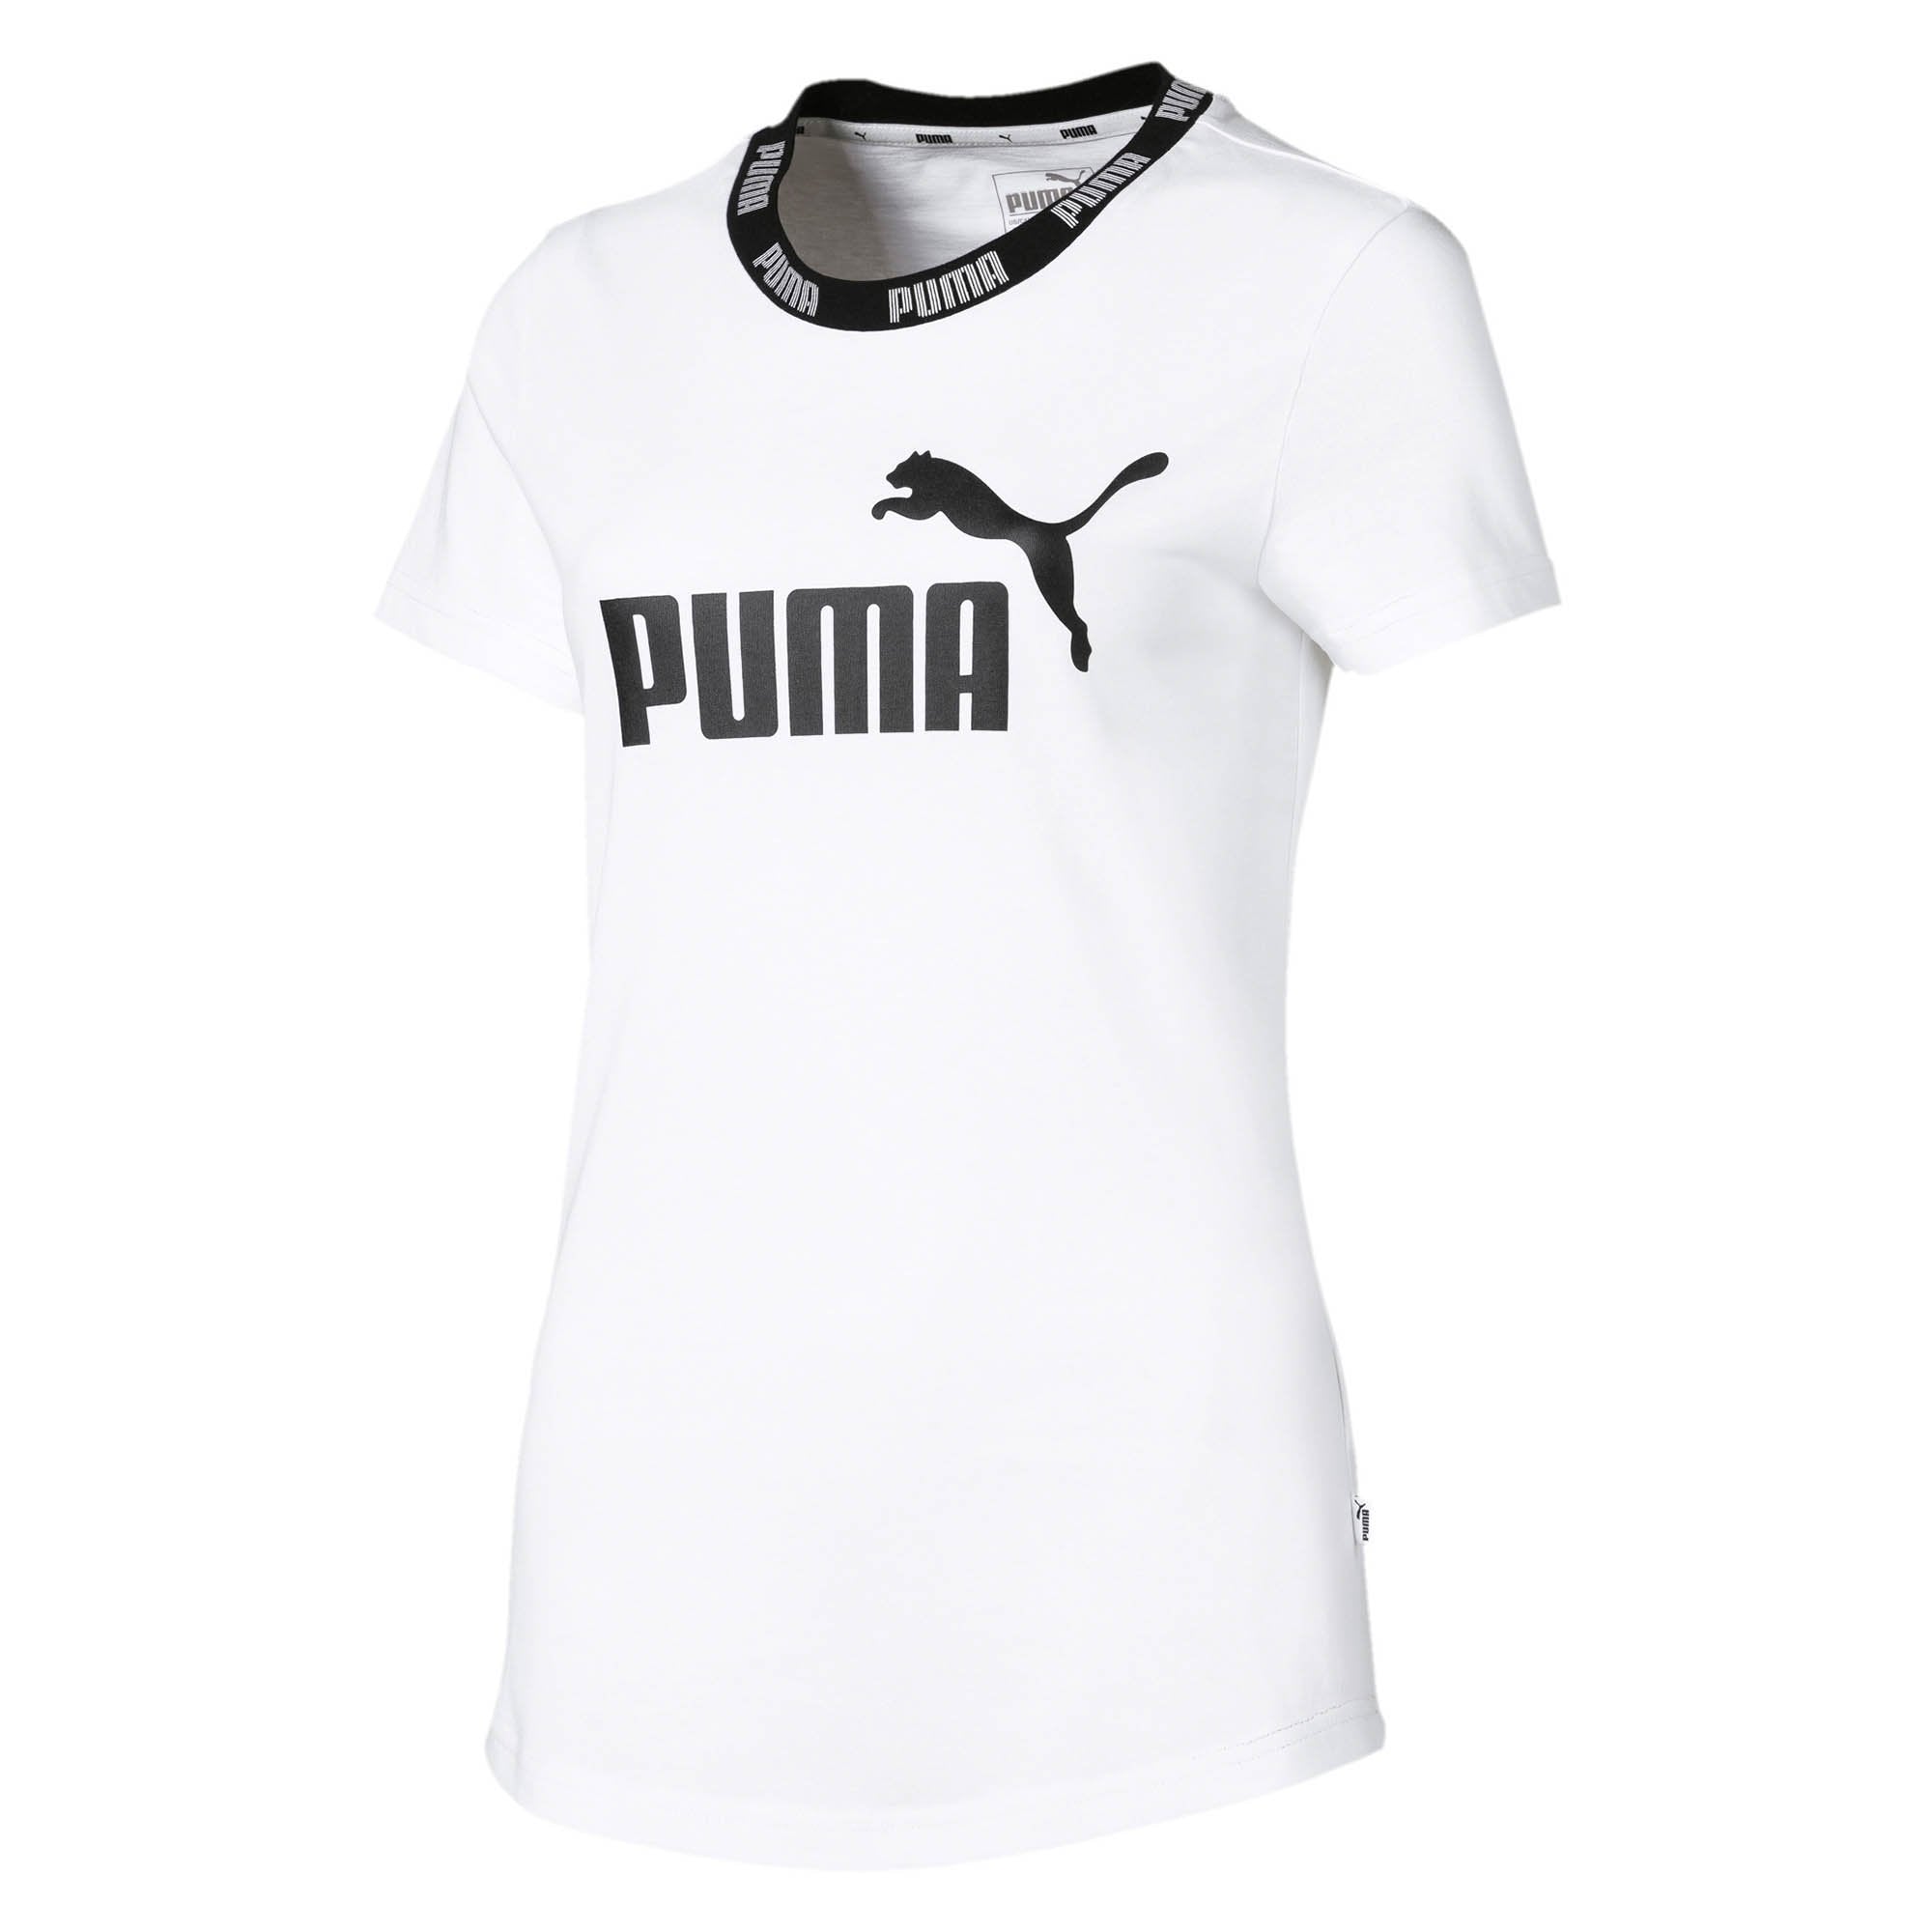 Buy Puma Women Amplified Tee Online in 